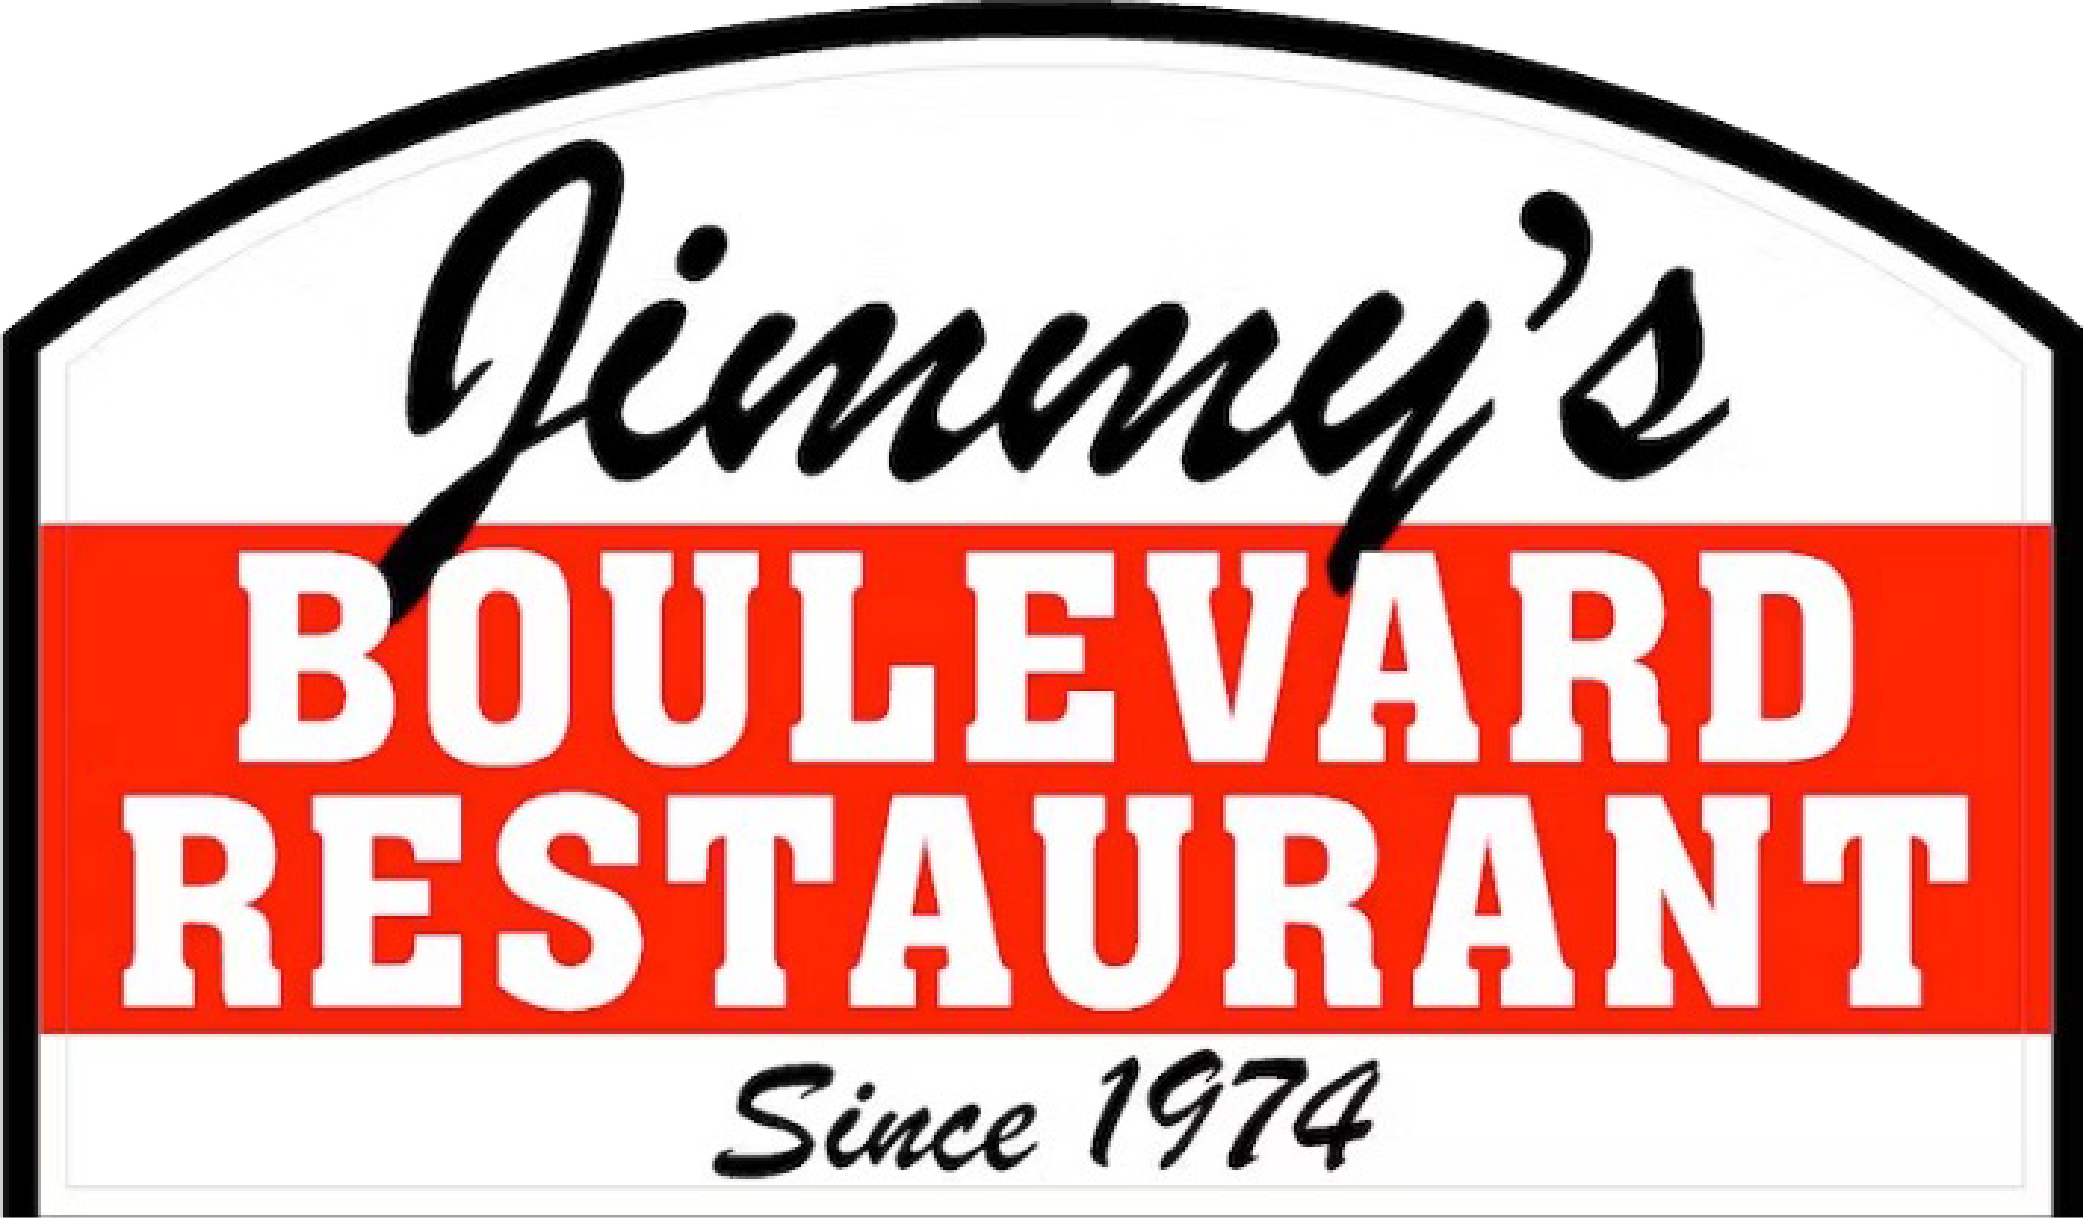 Jimmy's Boulevard Restaurant Home